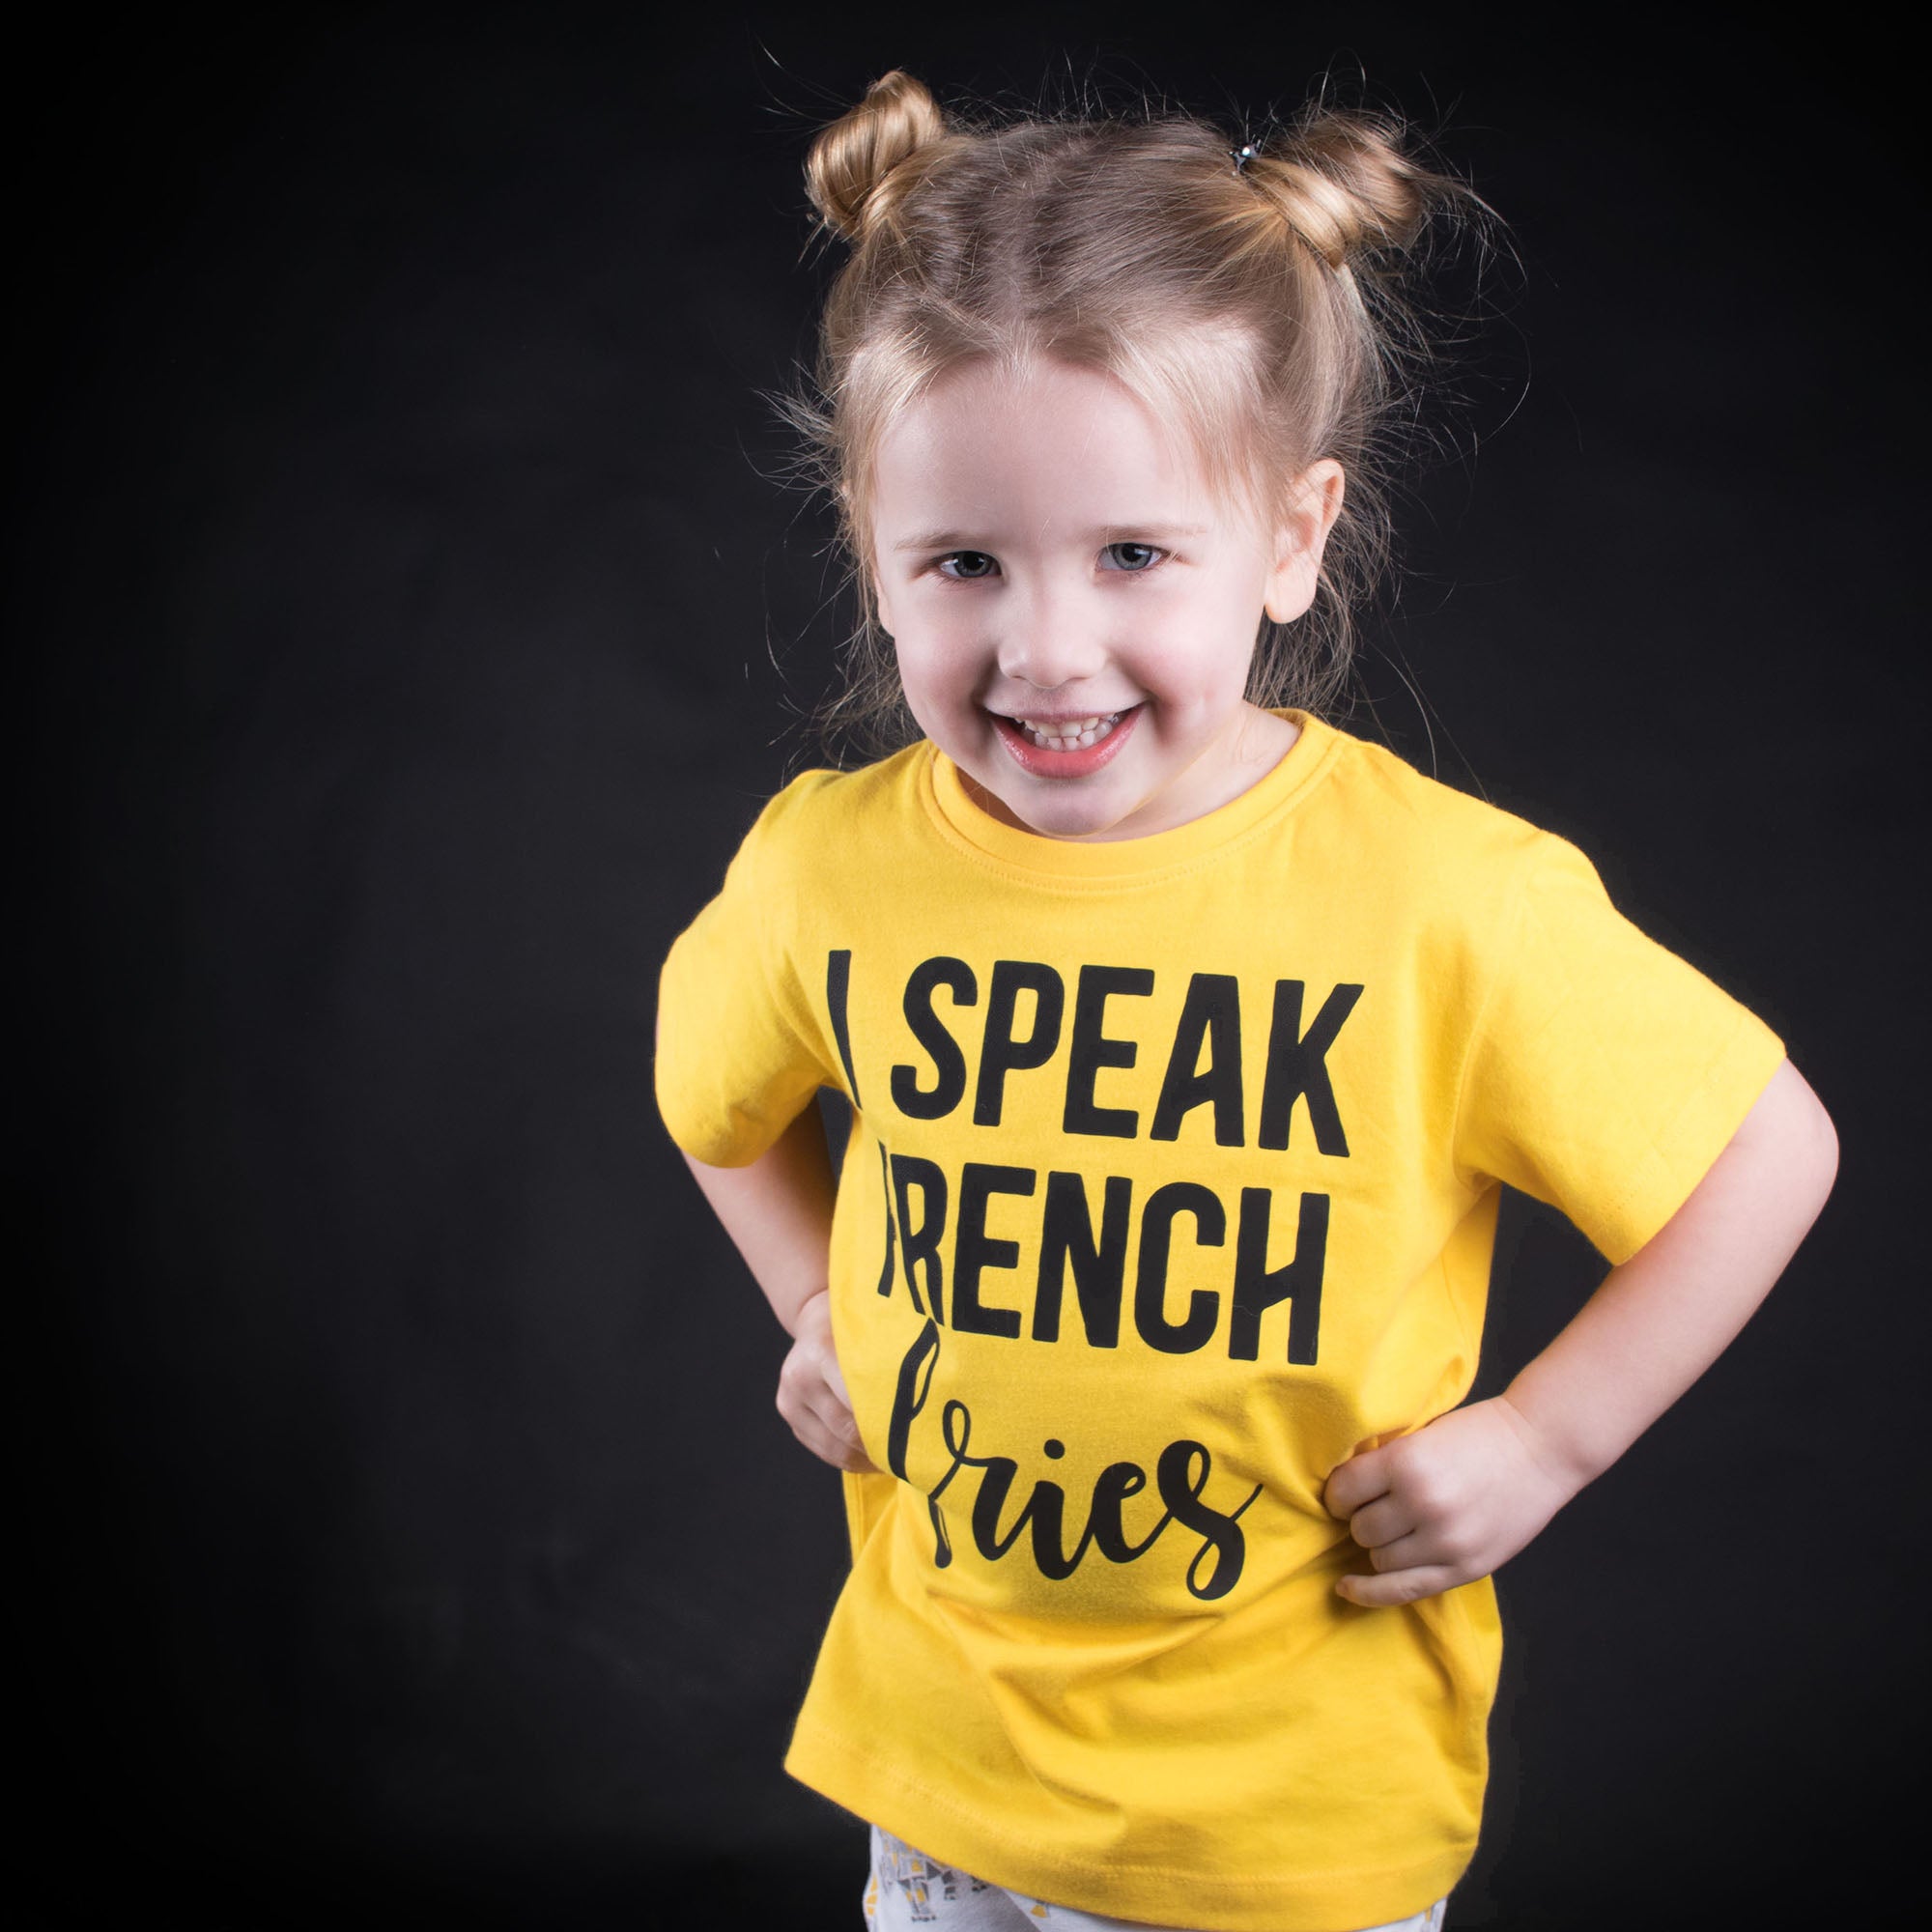 'I speak French fries' kids shortsleeve shirt